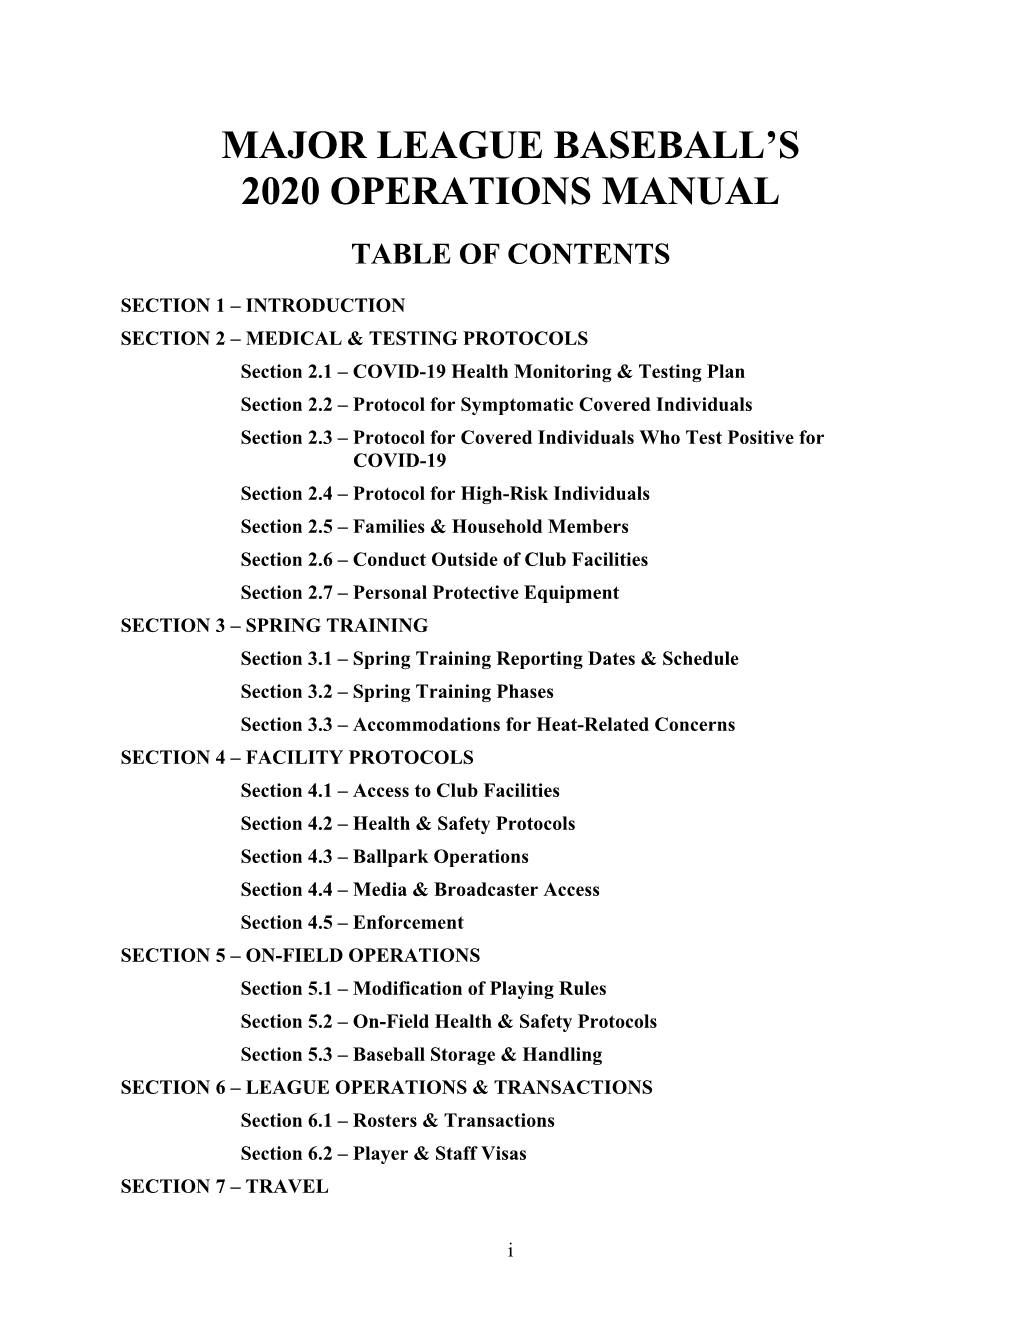 Major League Baseball's 2020 Operations Manual